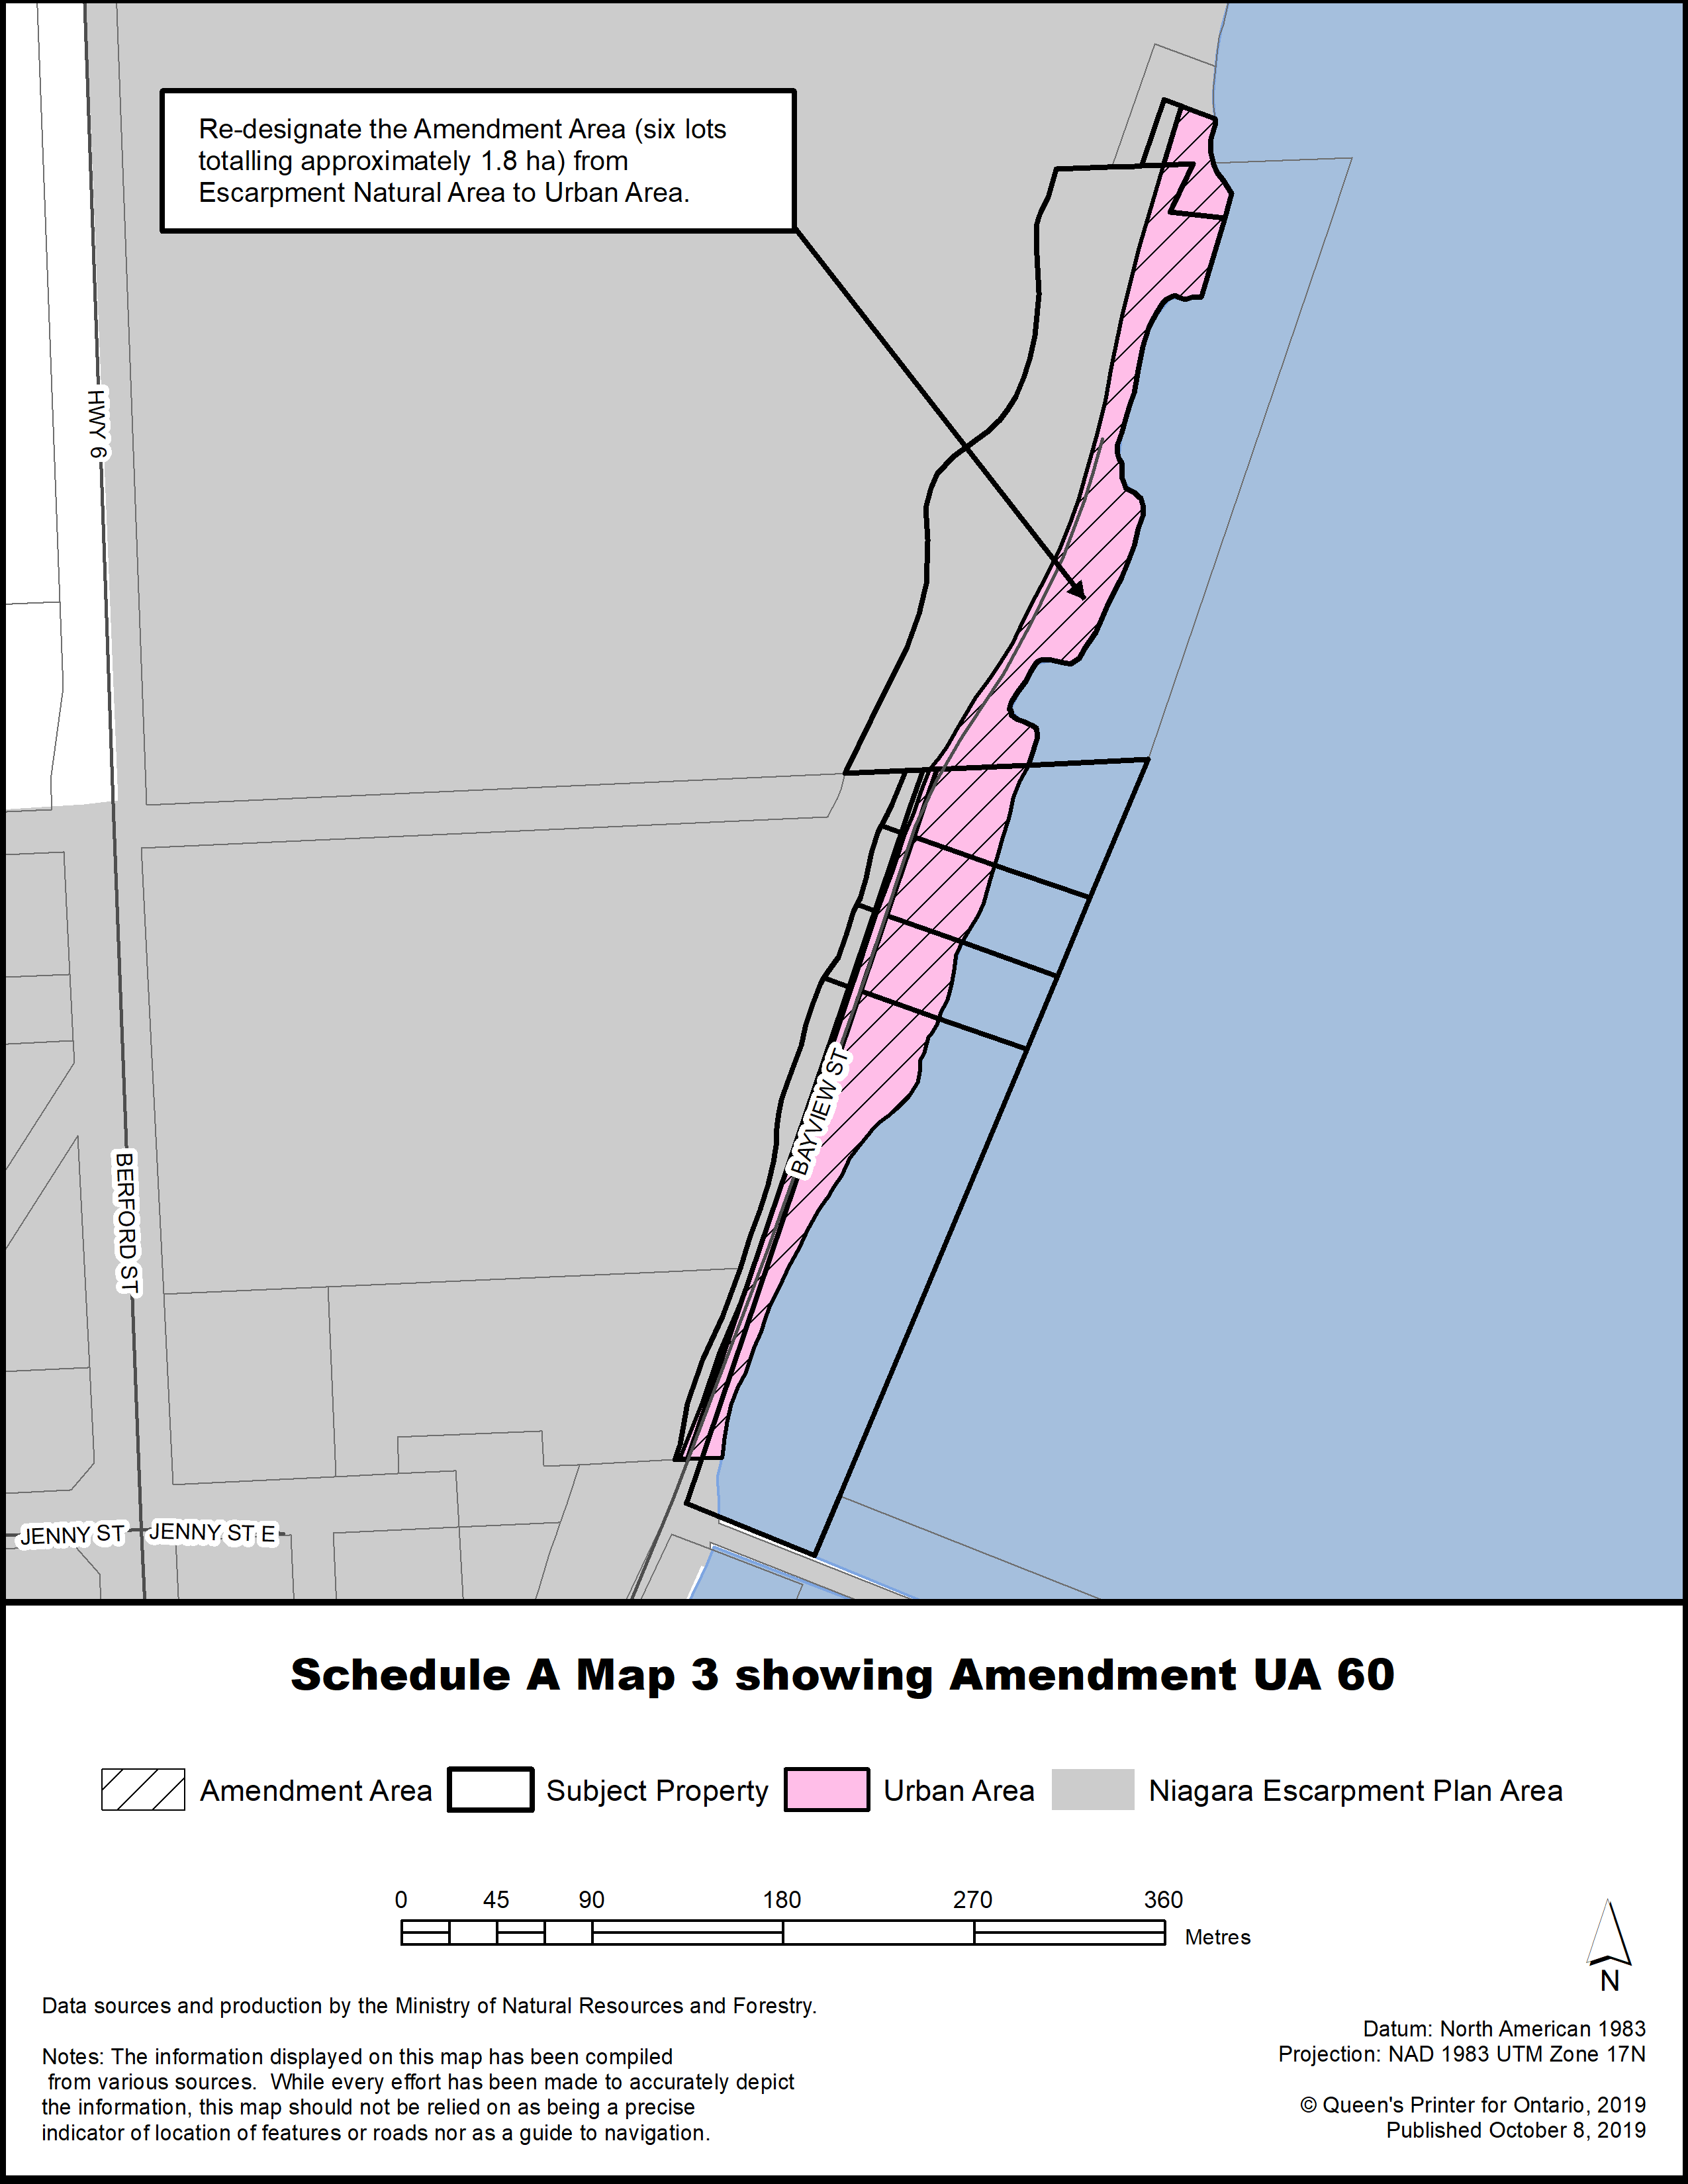 Schedule A Map 3 showing Amendment UA 60.
Re-designate the Amendment Area (six lots totalling approximately 1.8 ha) from Escarpment Natural Area to Urban Area.